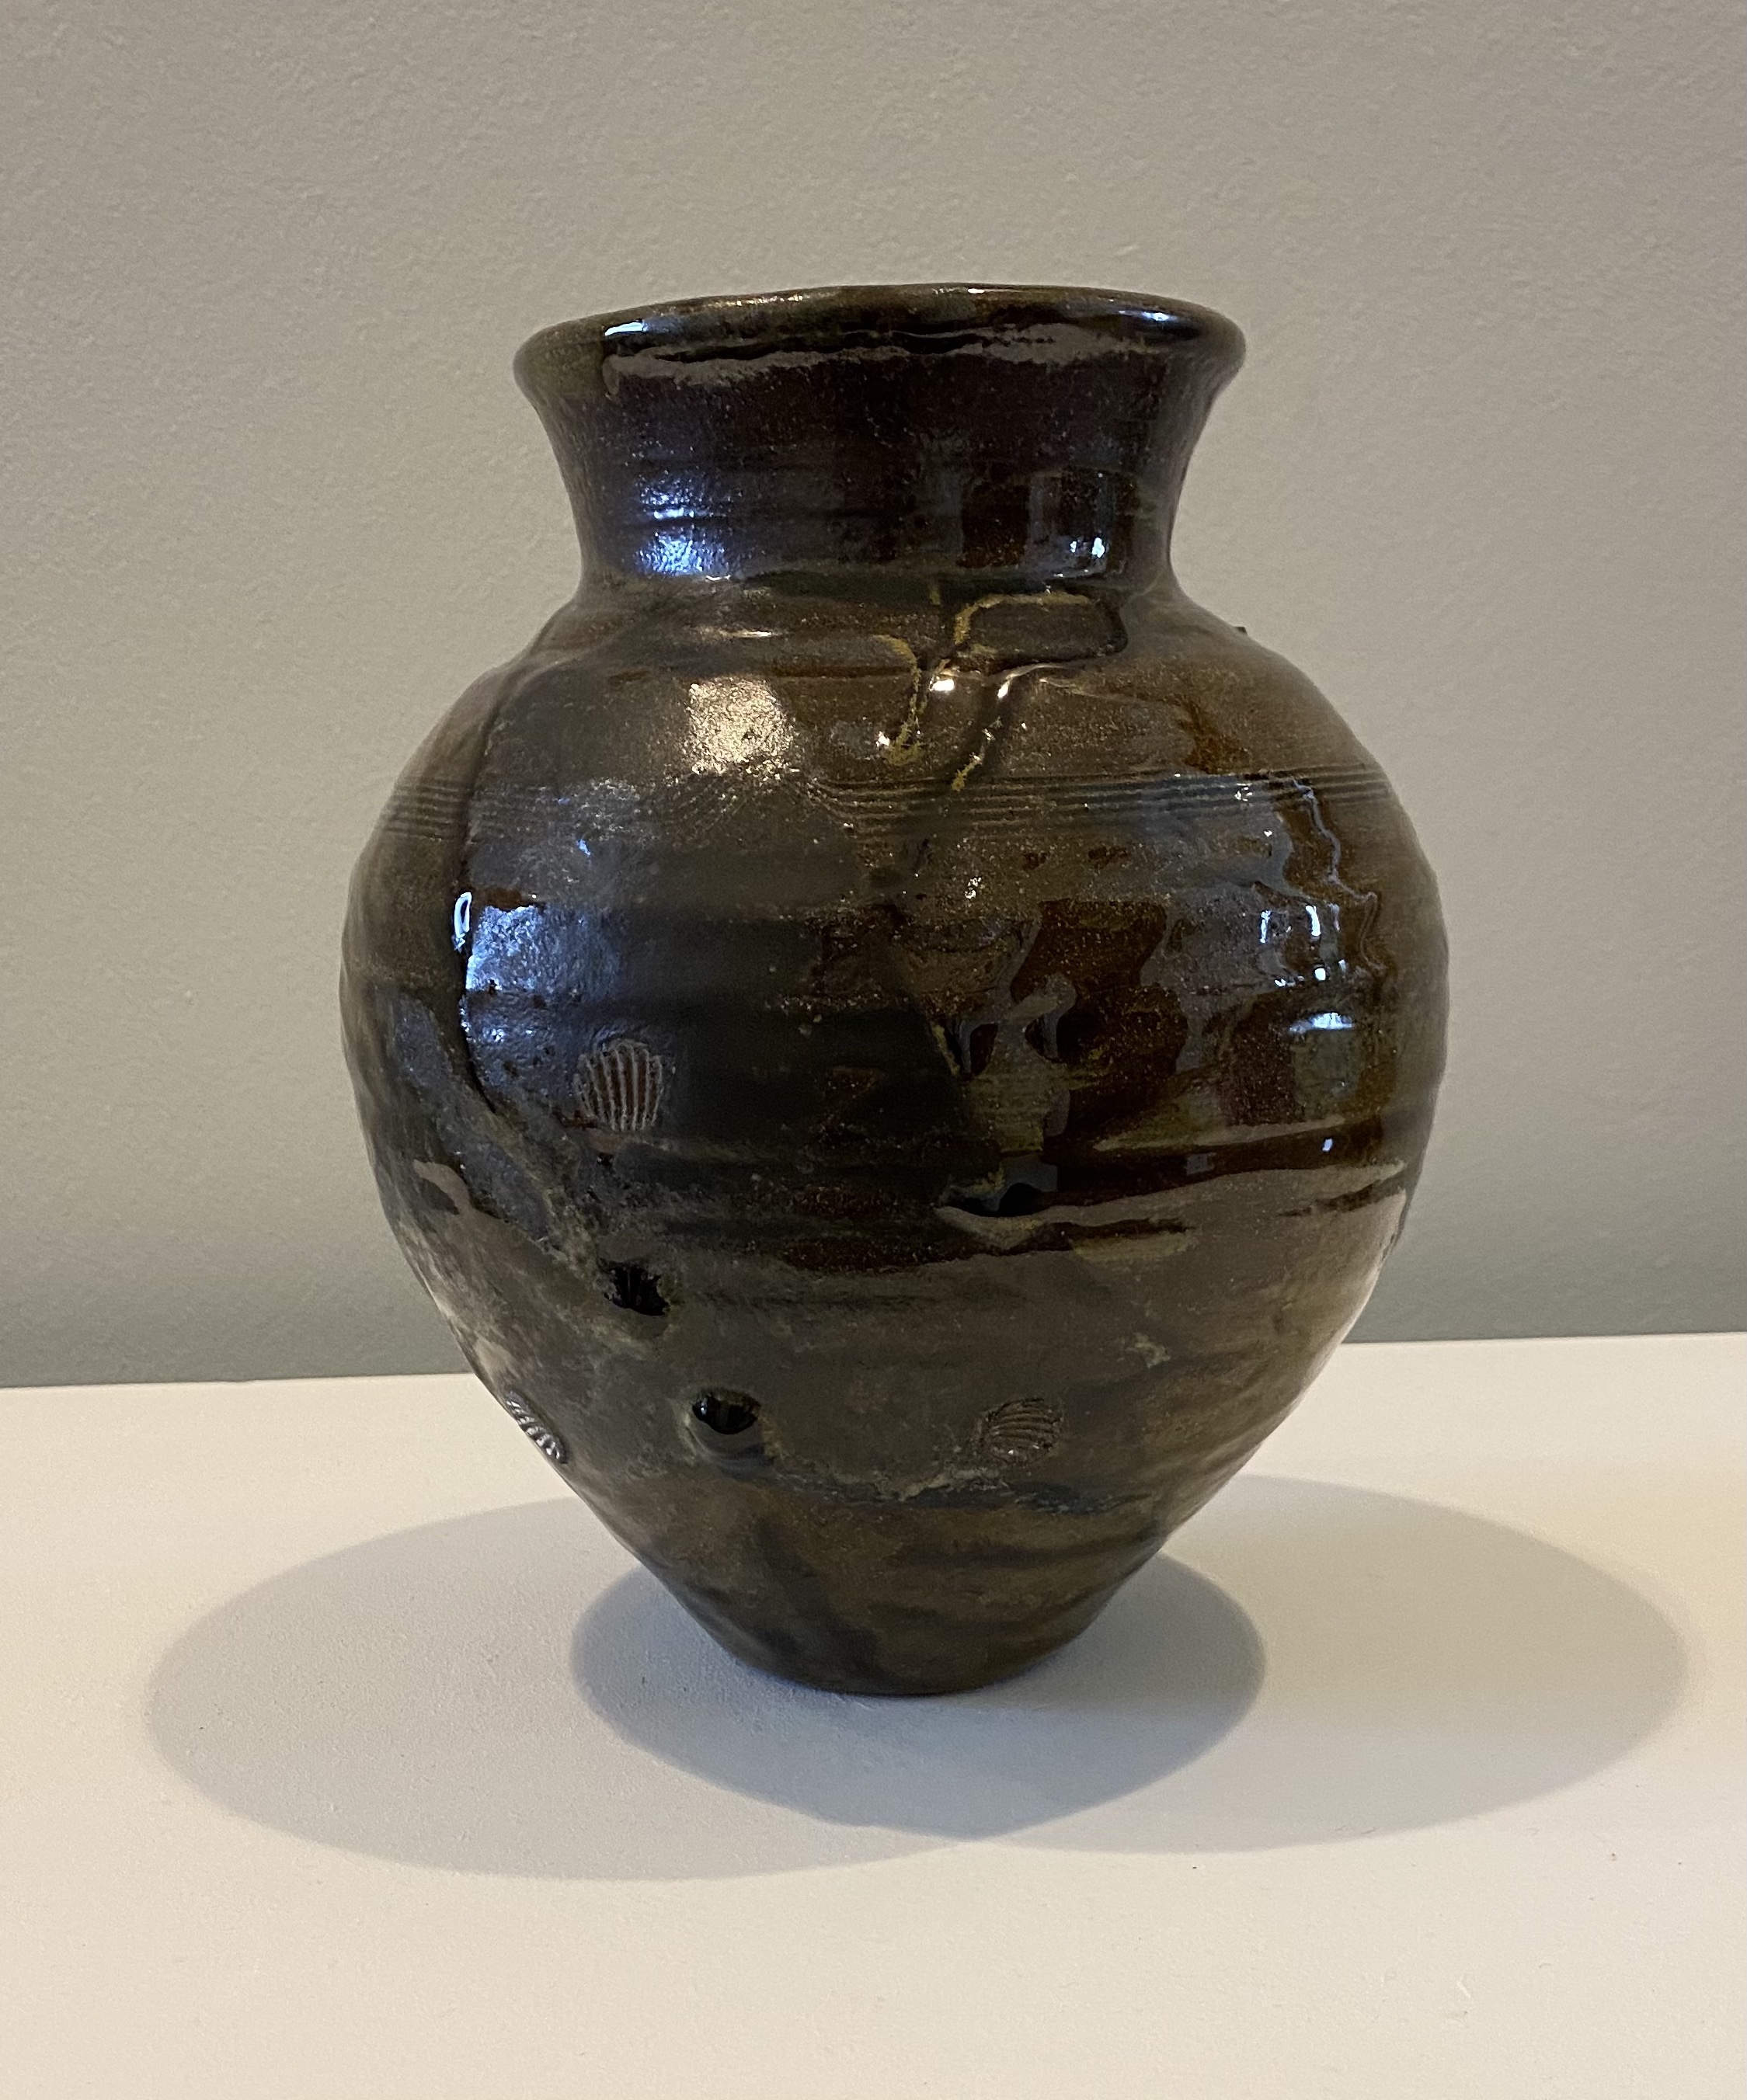 Vase
wood/salt-fired stoneware
9"
$110.